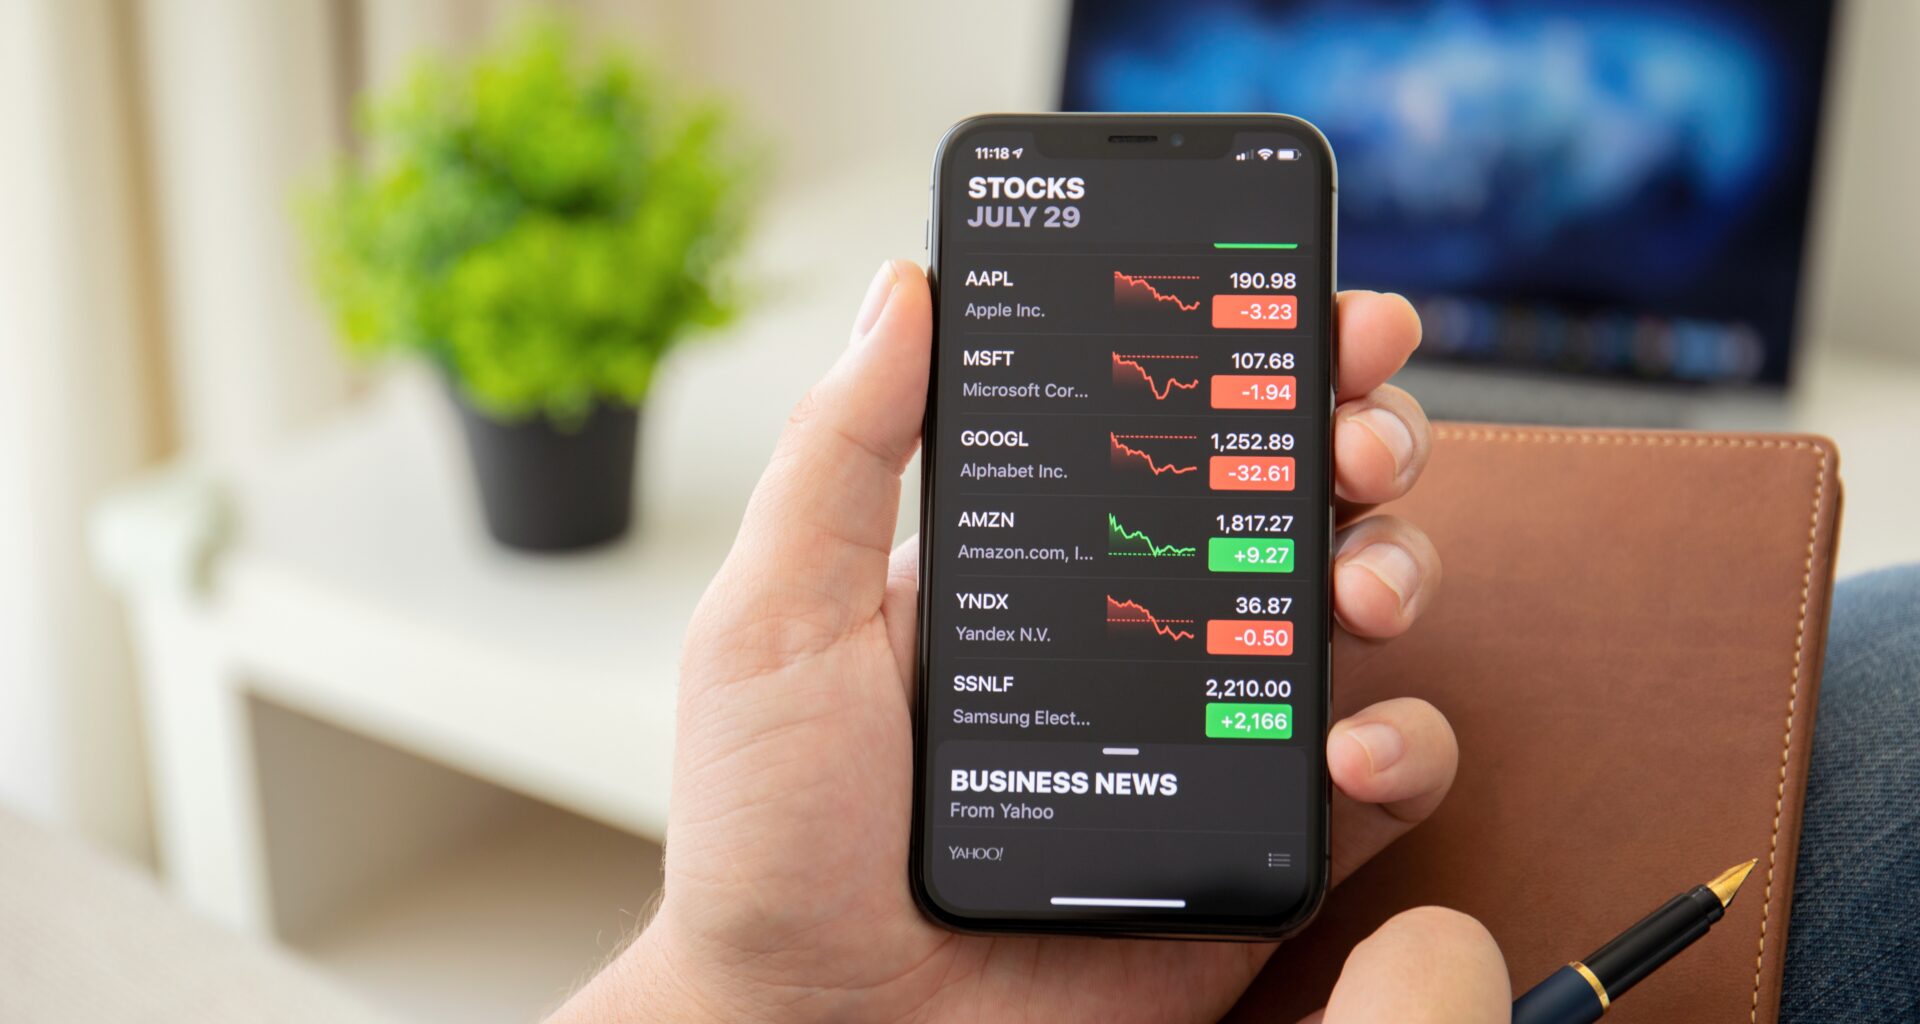 App Bolsa (Stocks) no iPhone